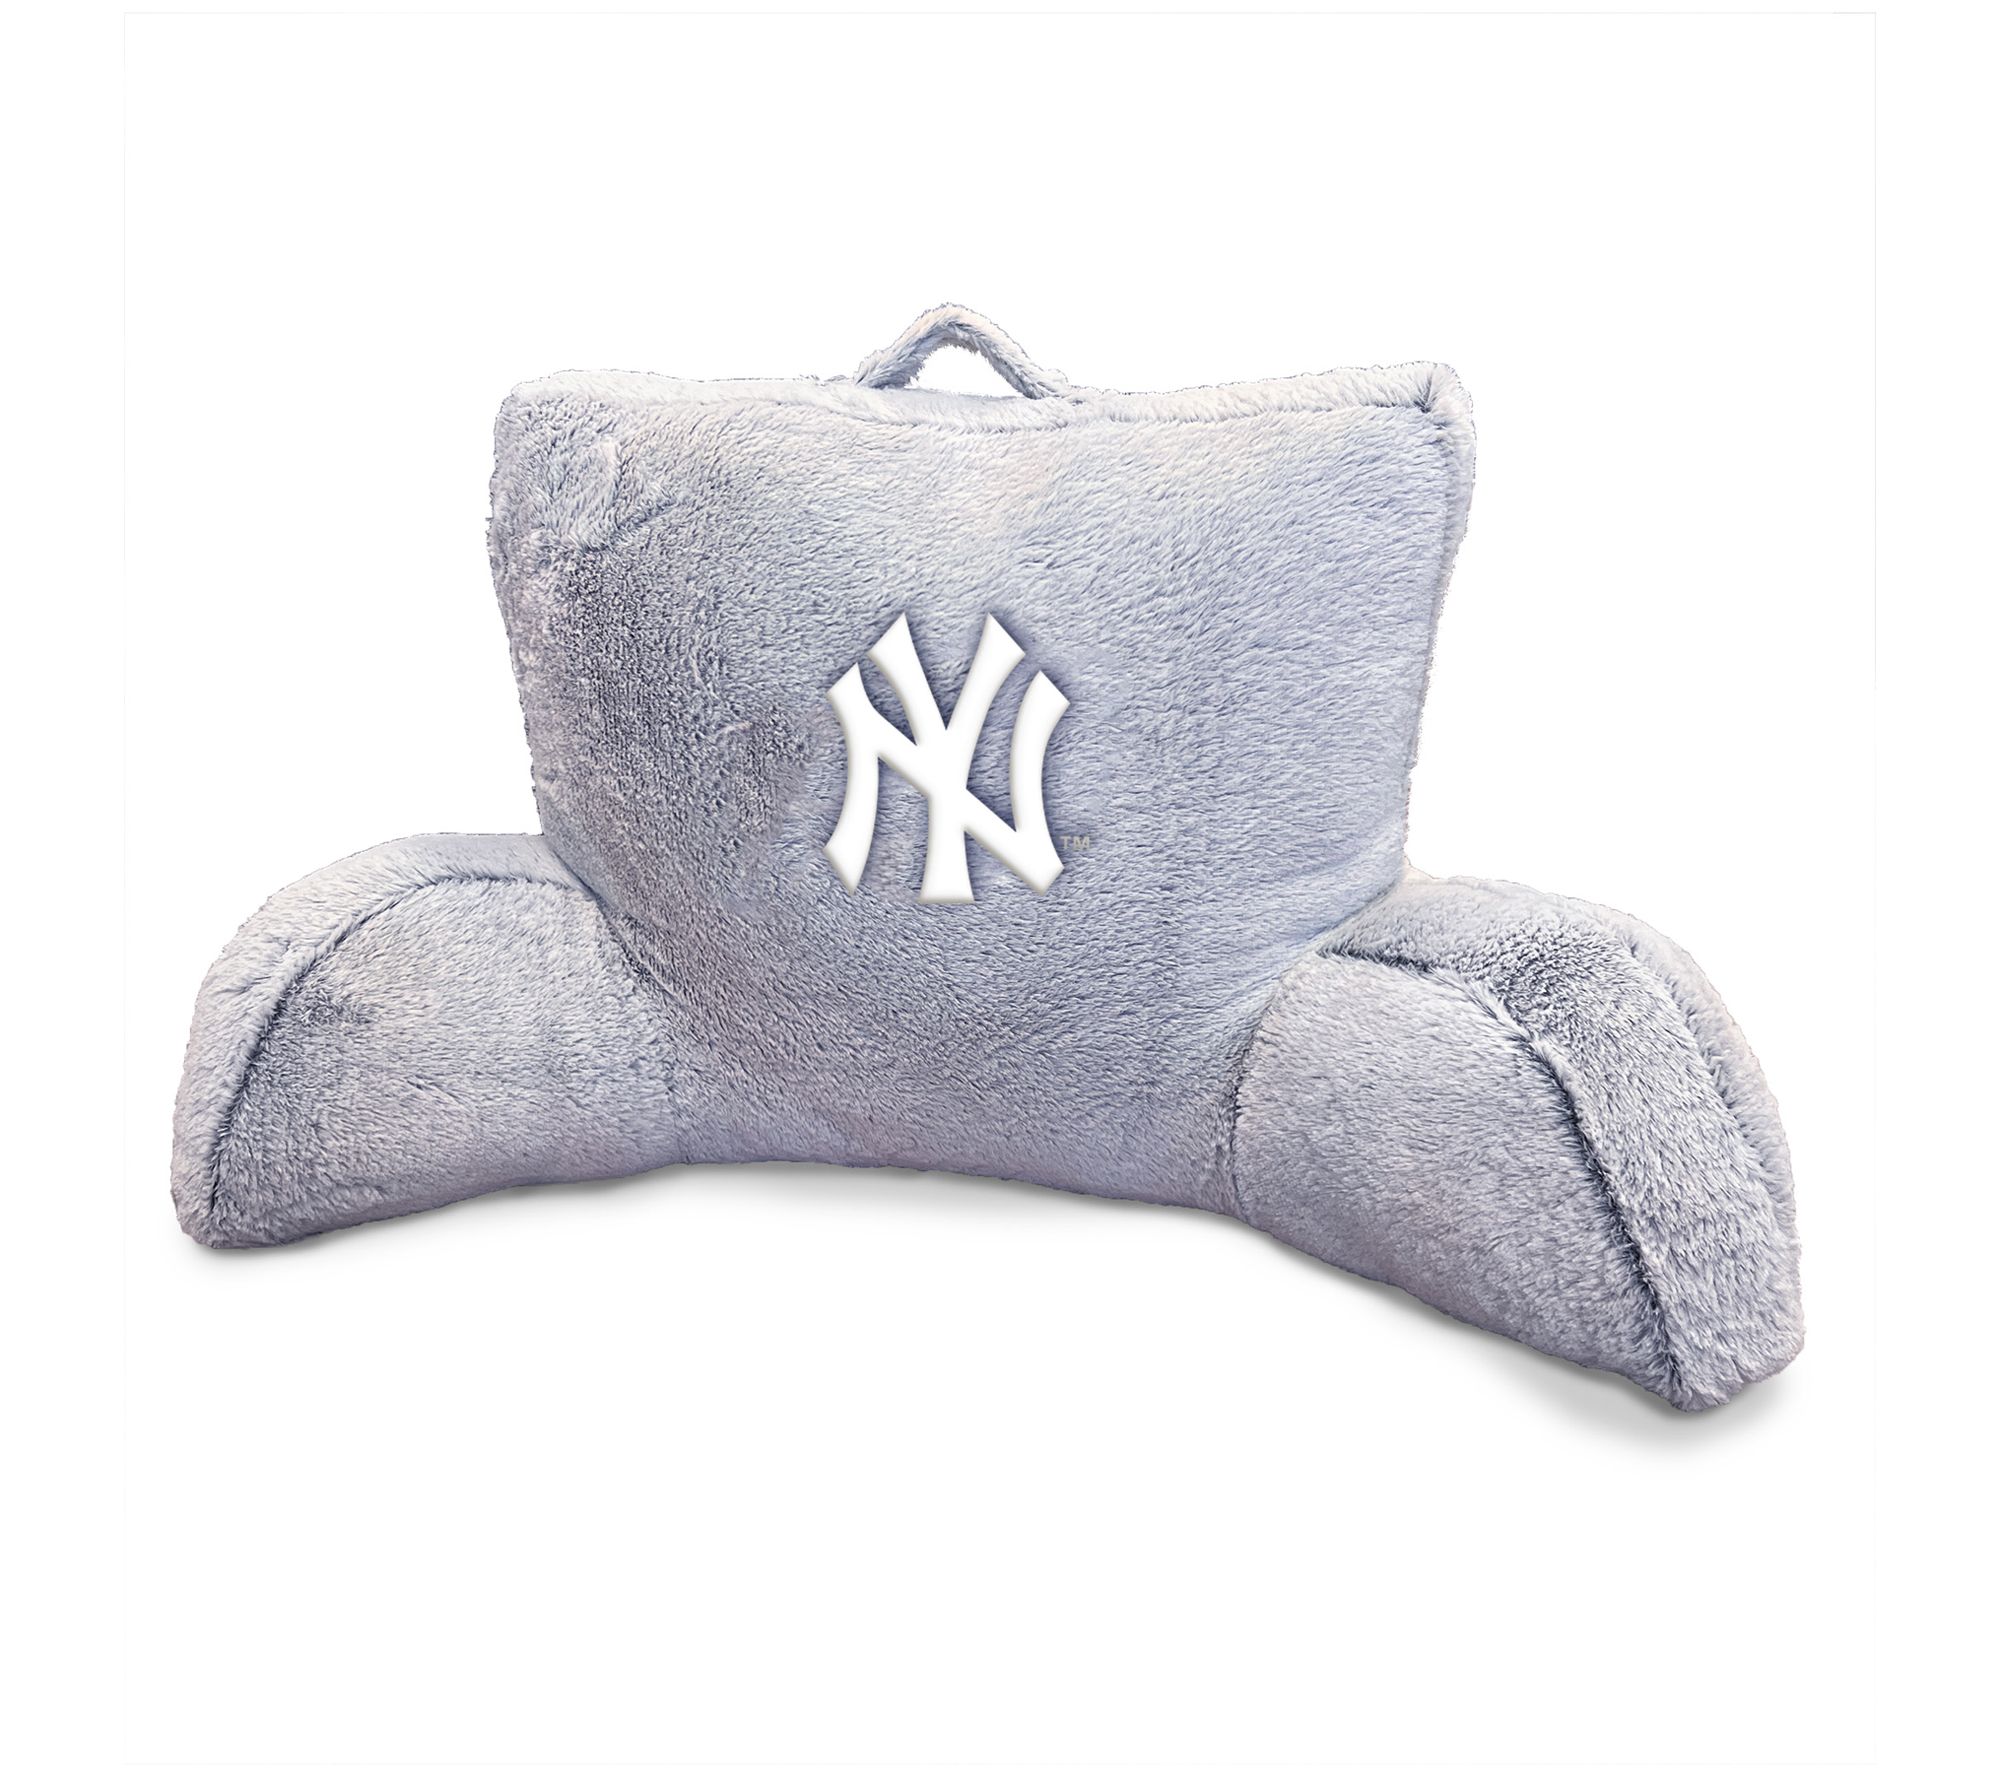 MLB New York Yankees Montero Cooler Tote Bag - Black